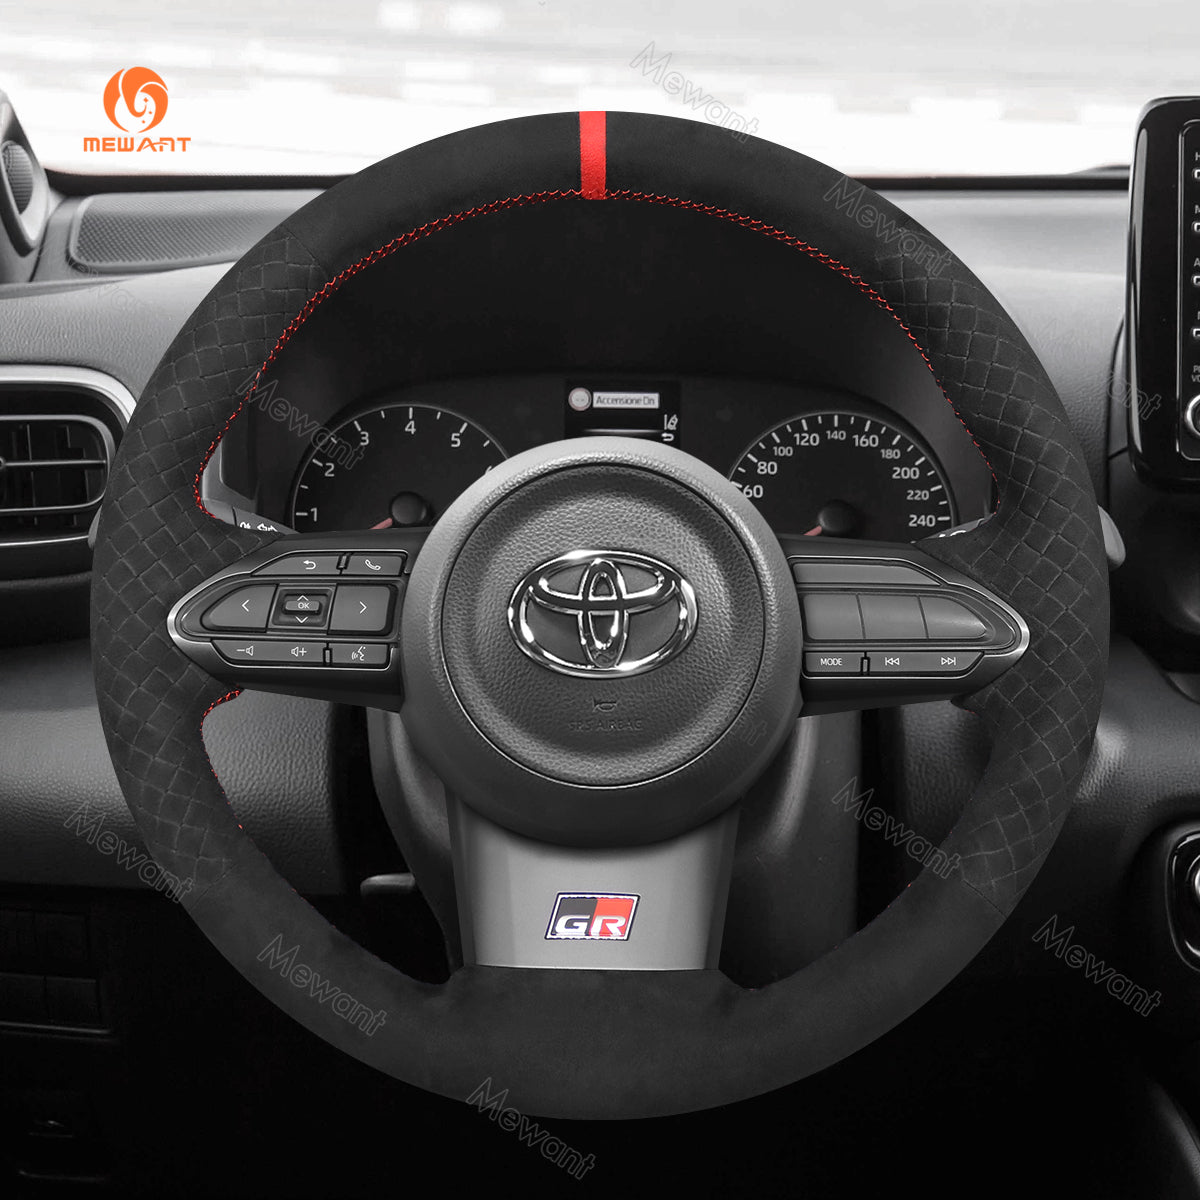 MEWANT Hand Stitch Car Steering Wheel Cover for Toyota Yaris GR 2020-2 – Mewant  steering wheel cover